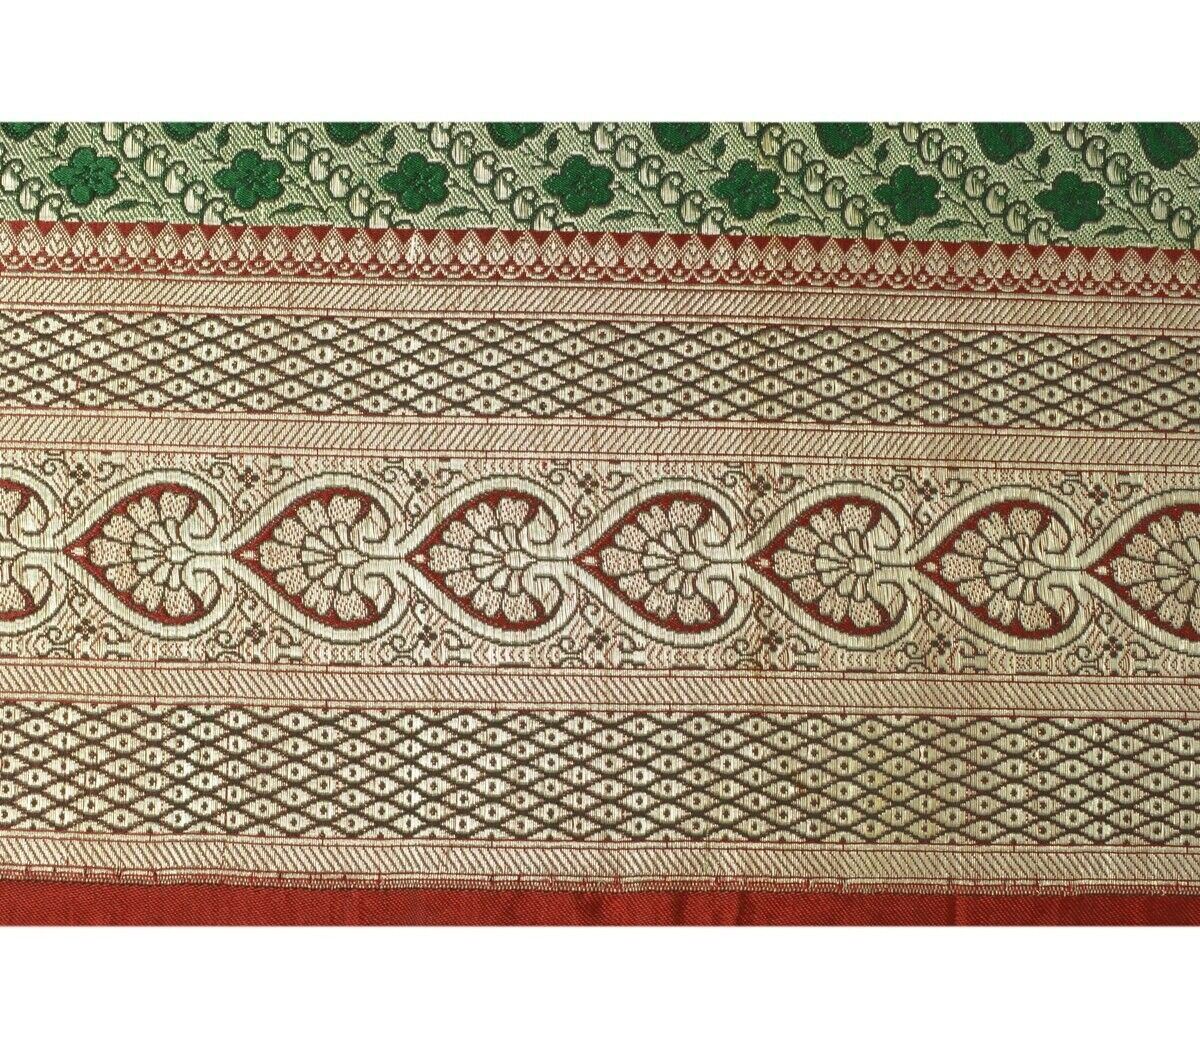 Vintage Sari Border Indian Craft Sewing Trim Woven Banarasi Brocade Ribbon Lace